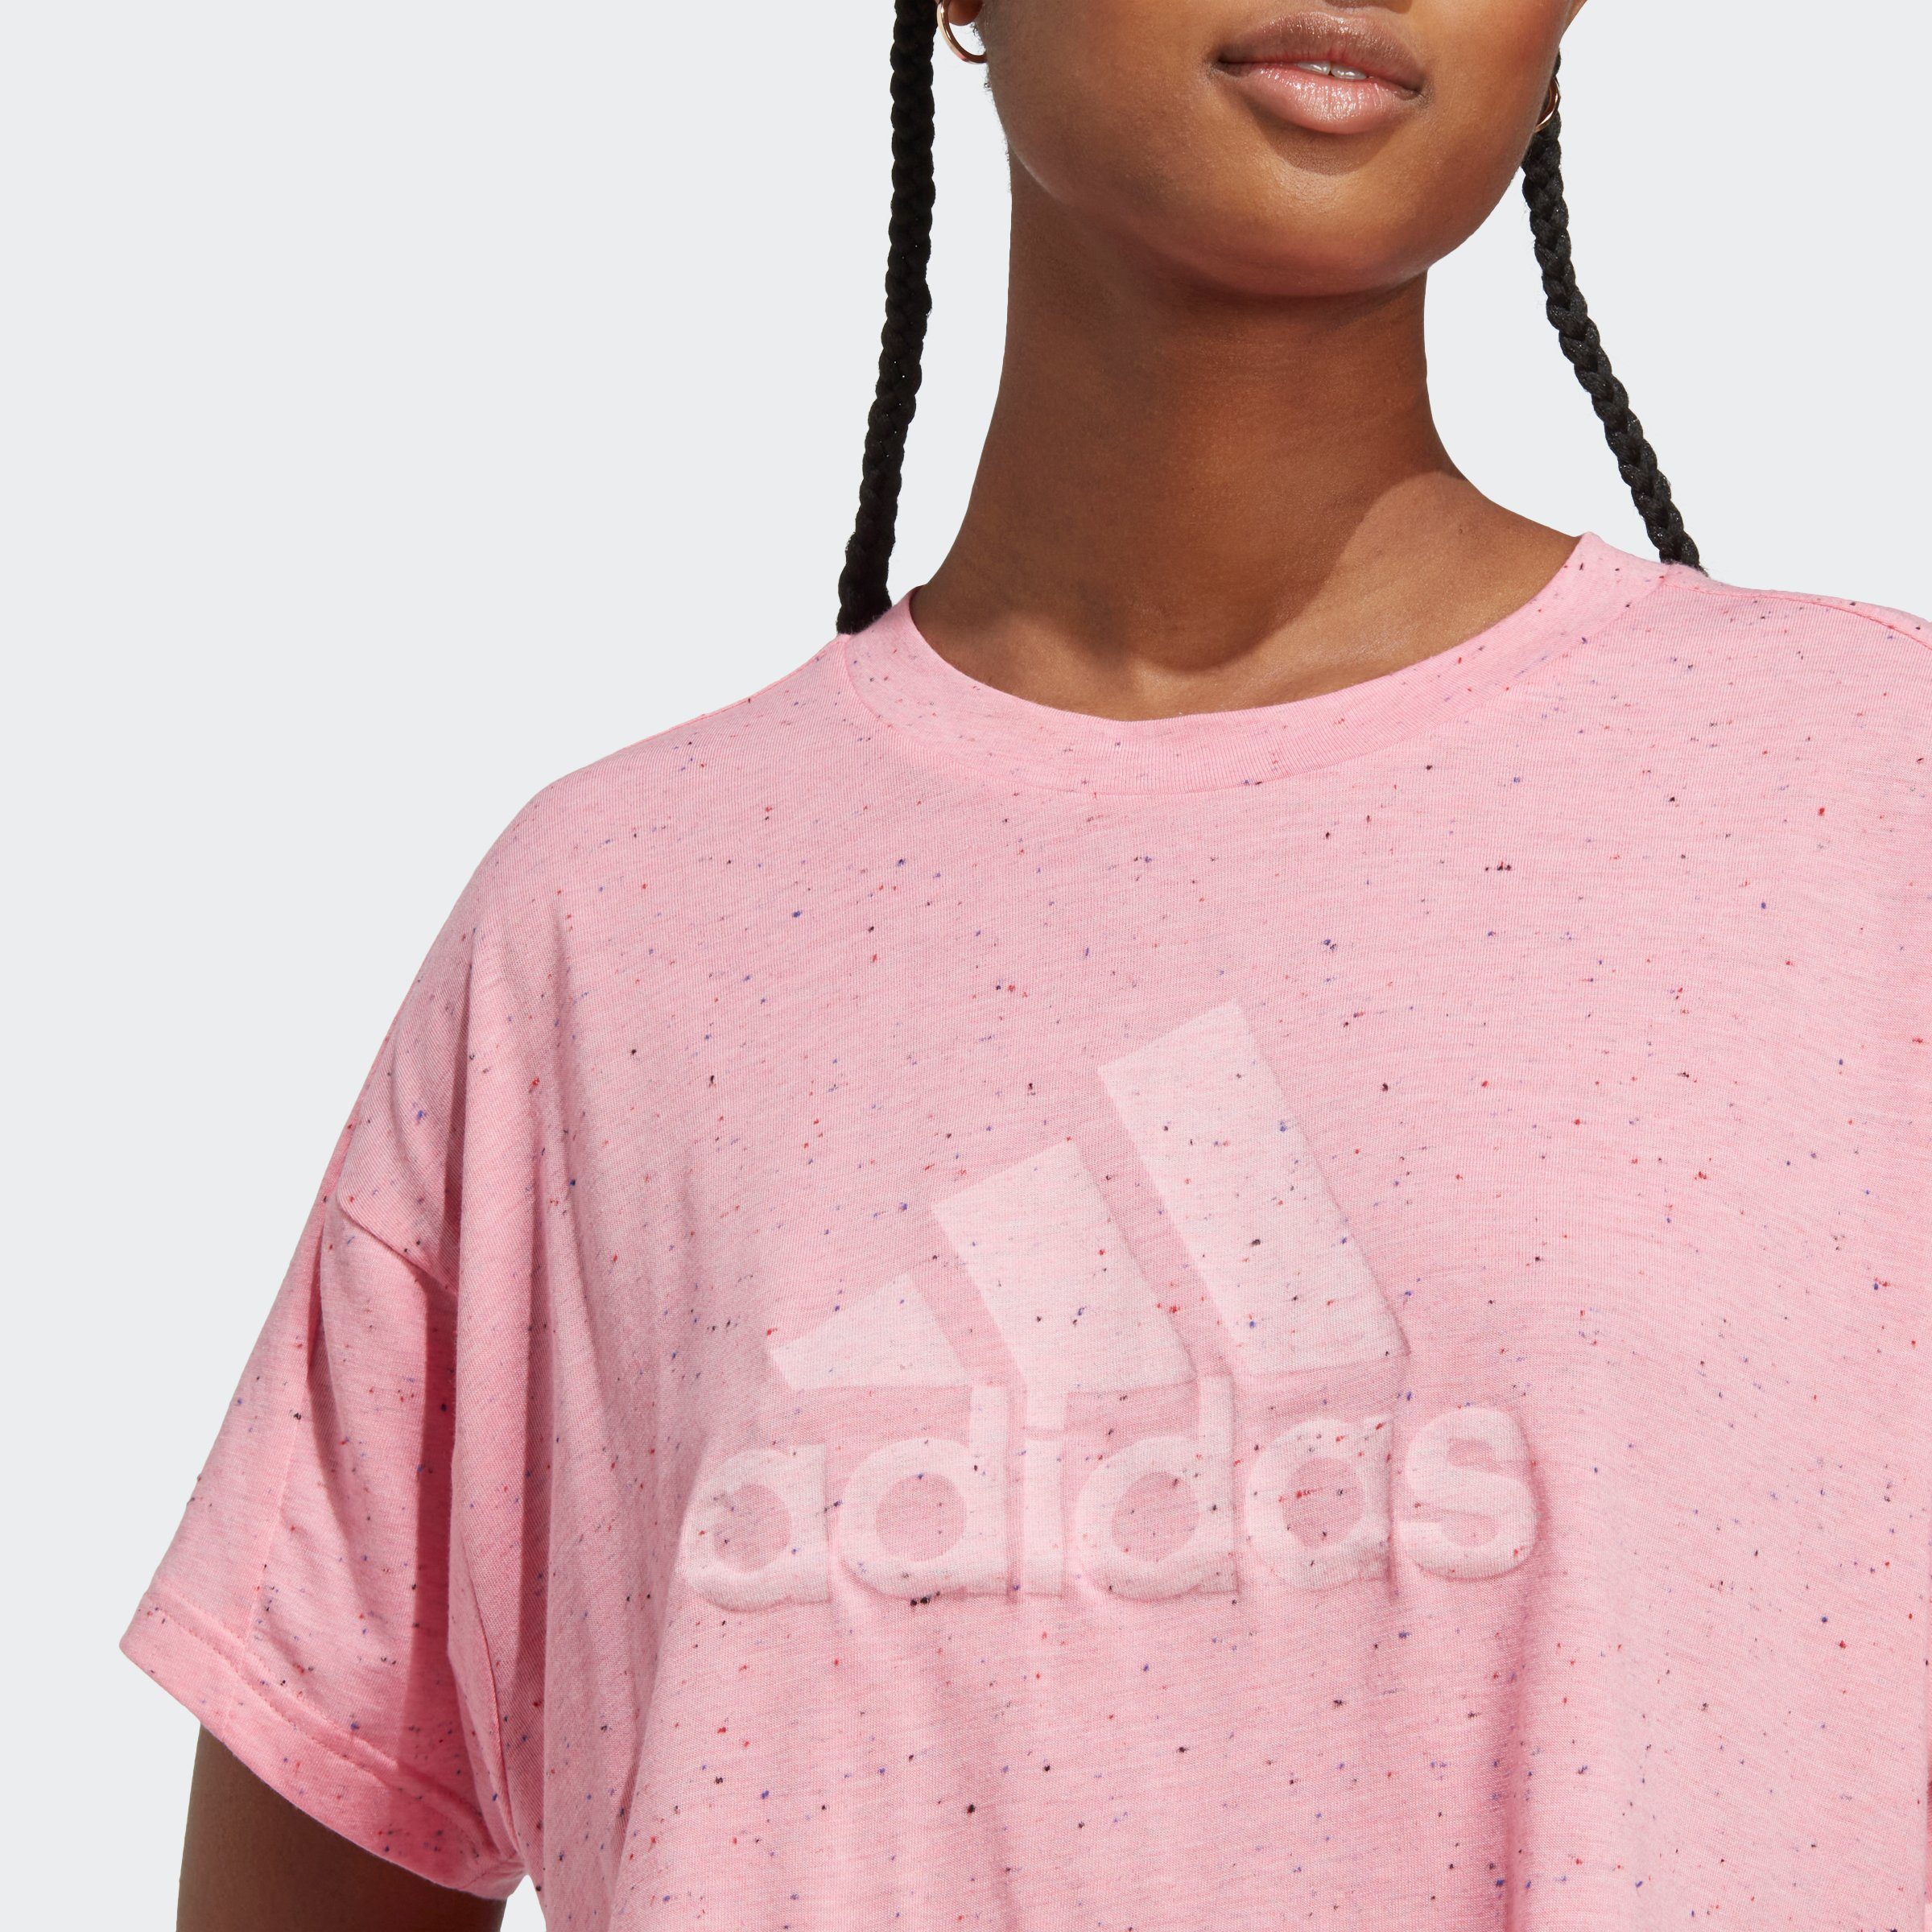 adidas Pink T-Shirt ICONS White Bliss Mel. Sportswear / FUTURE WINNERS